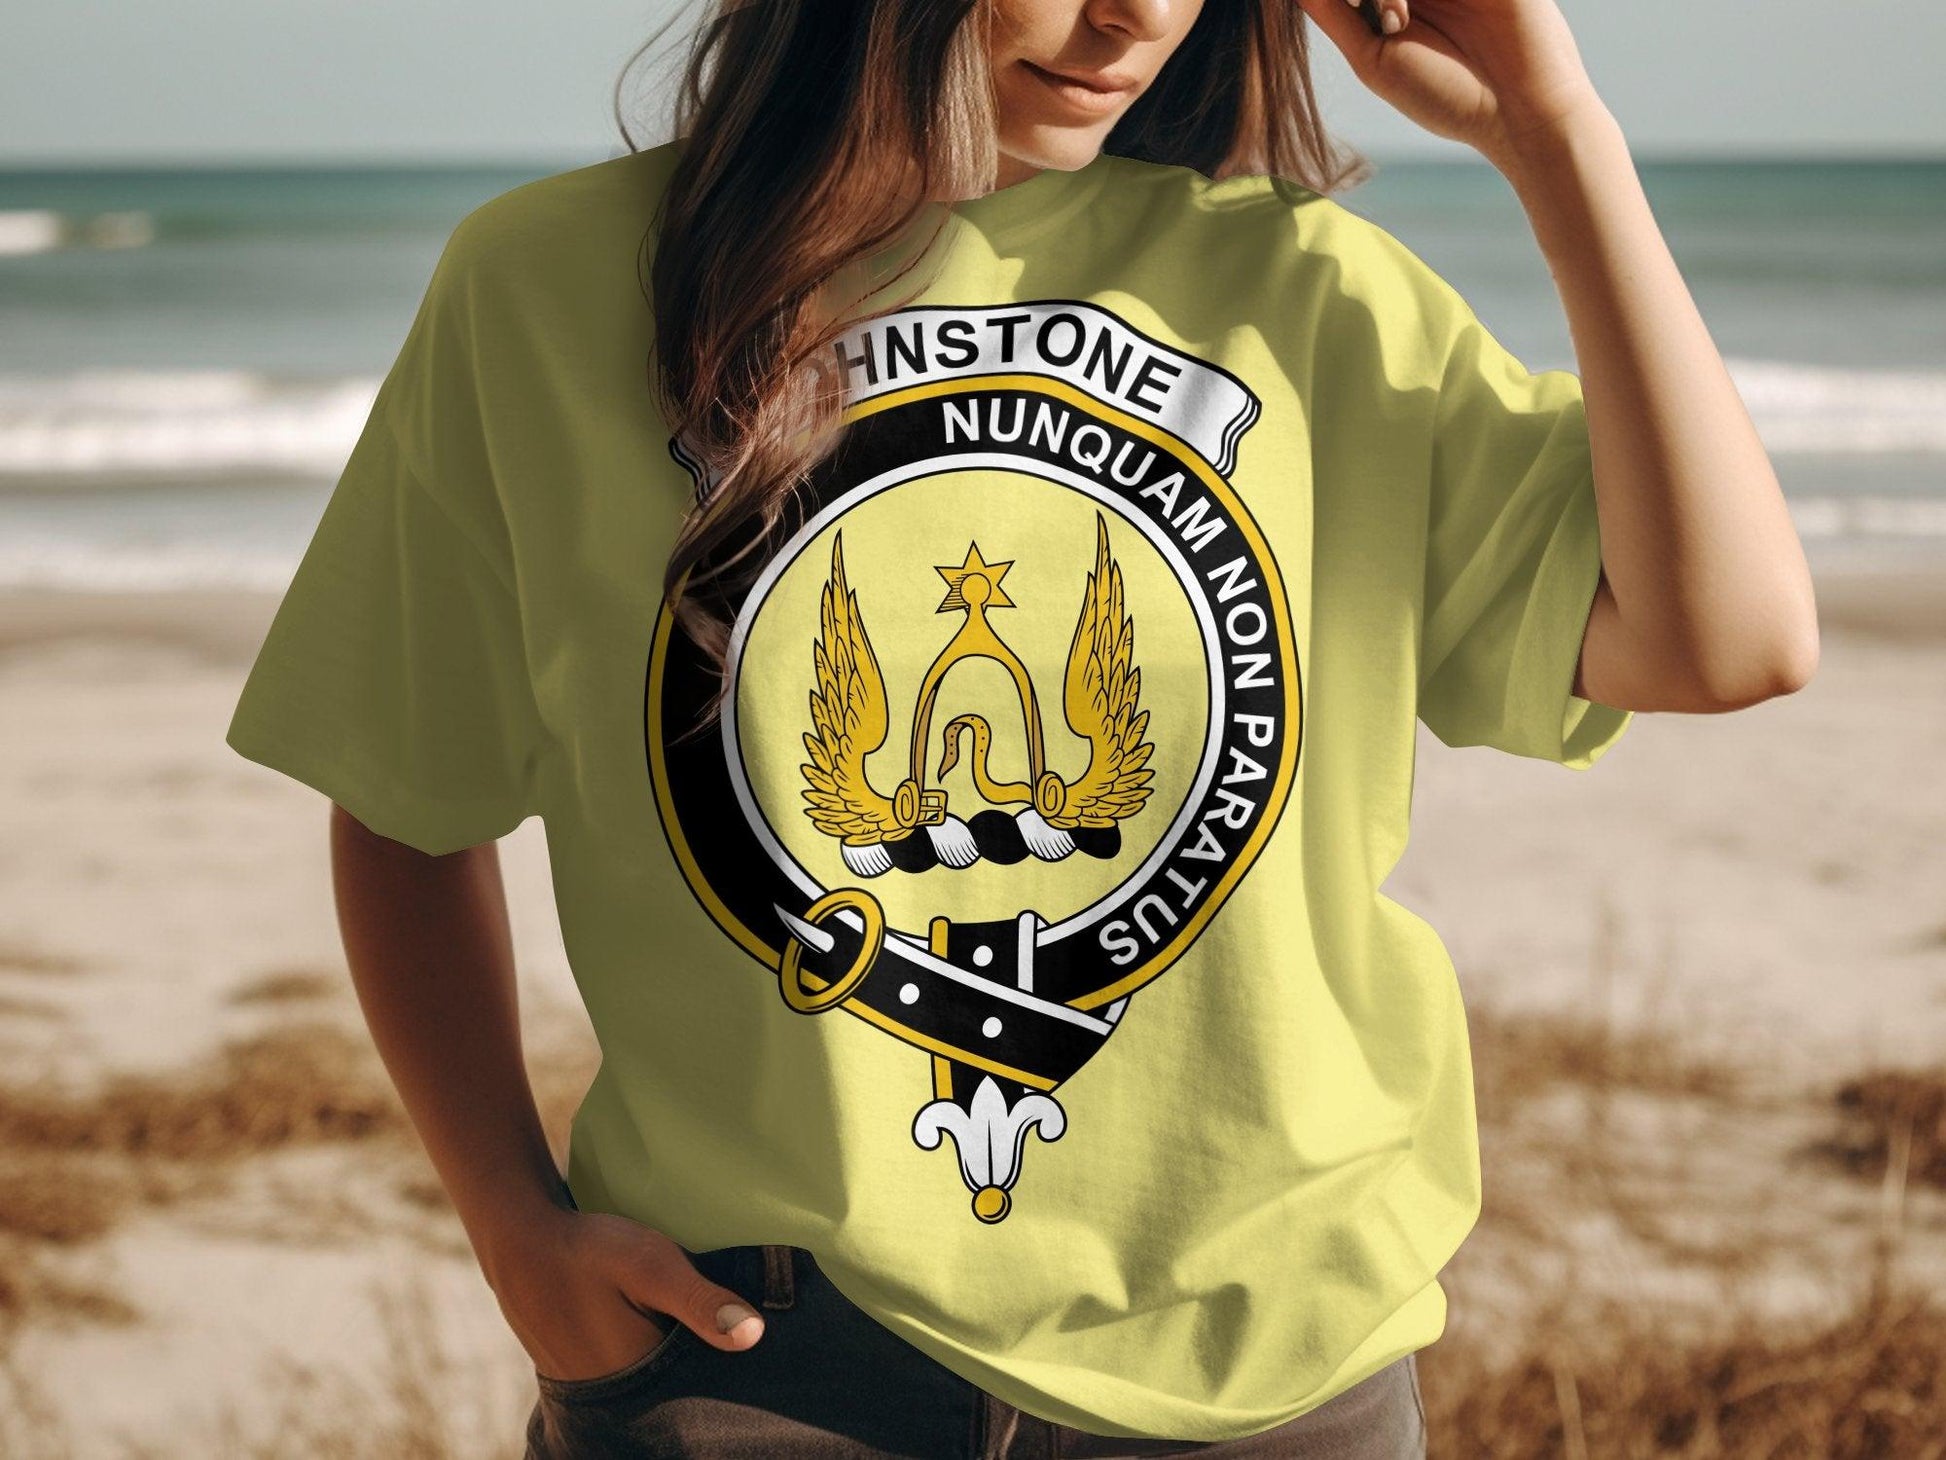 Johnstone Clan Crest Highland Games Festival T-Shirt - Living Stone Gifts